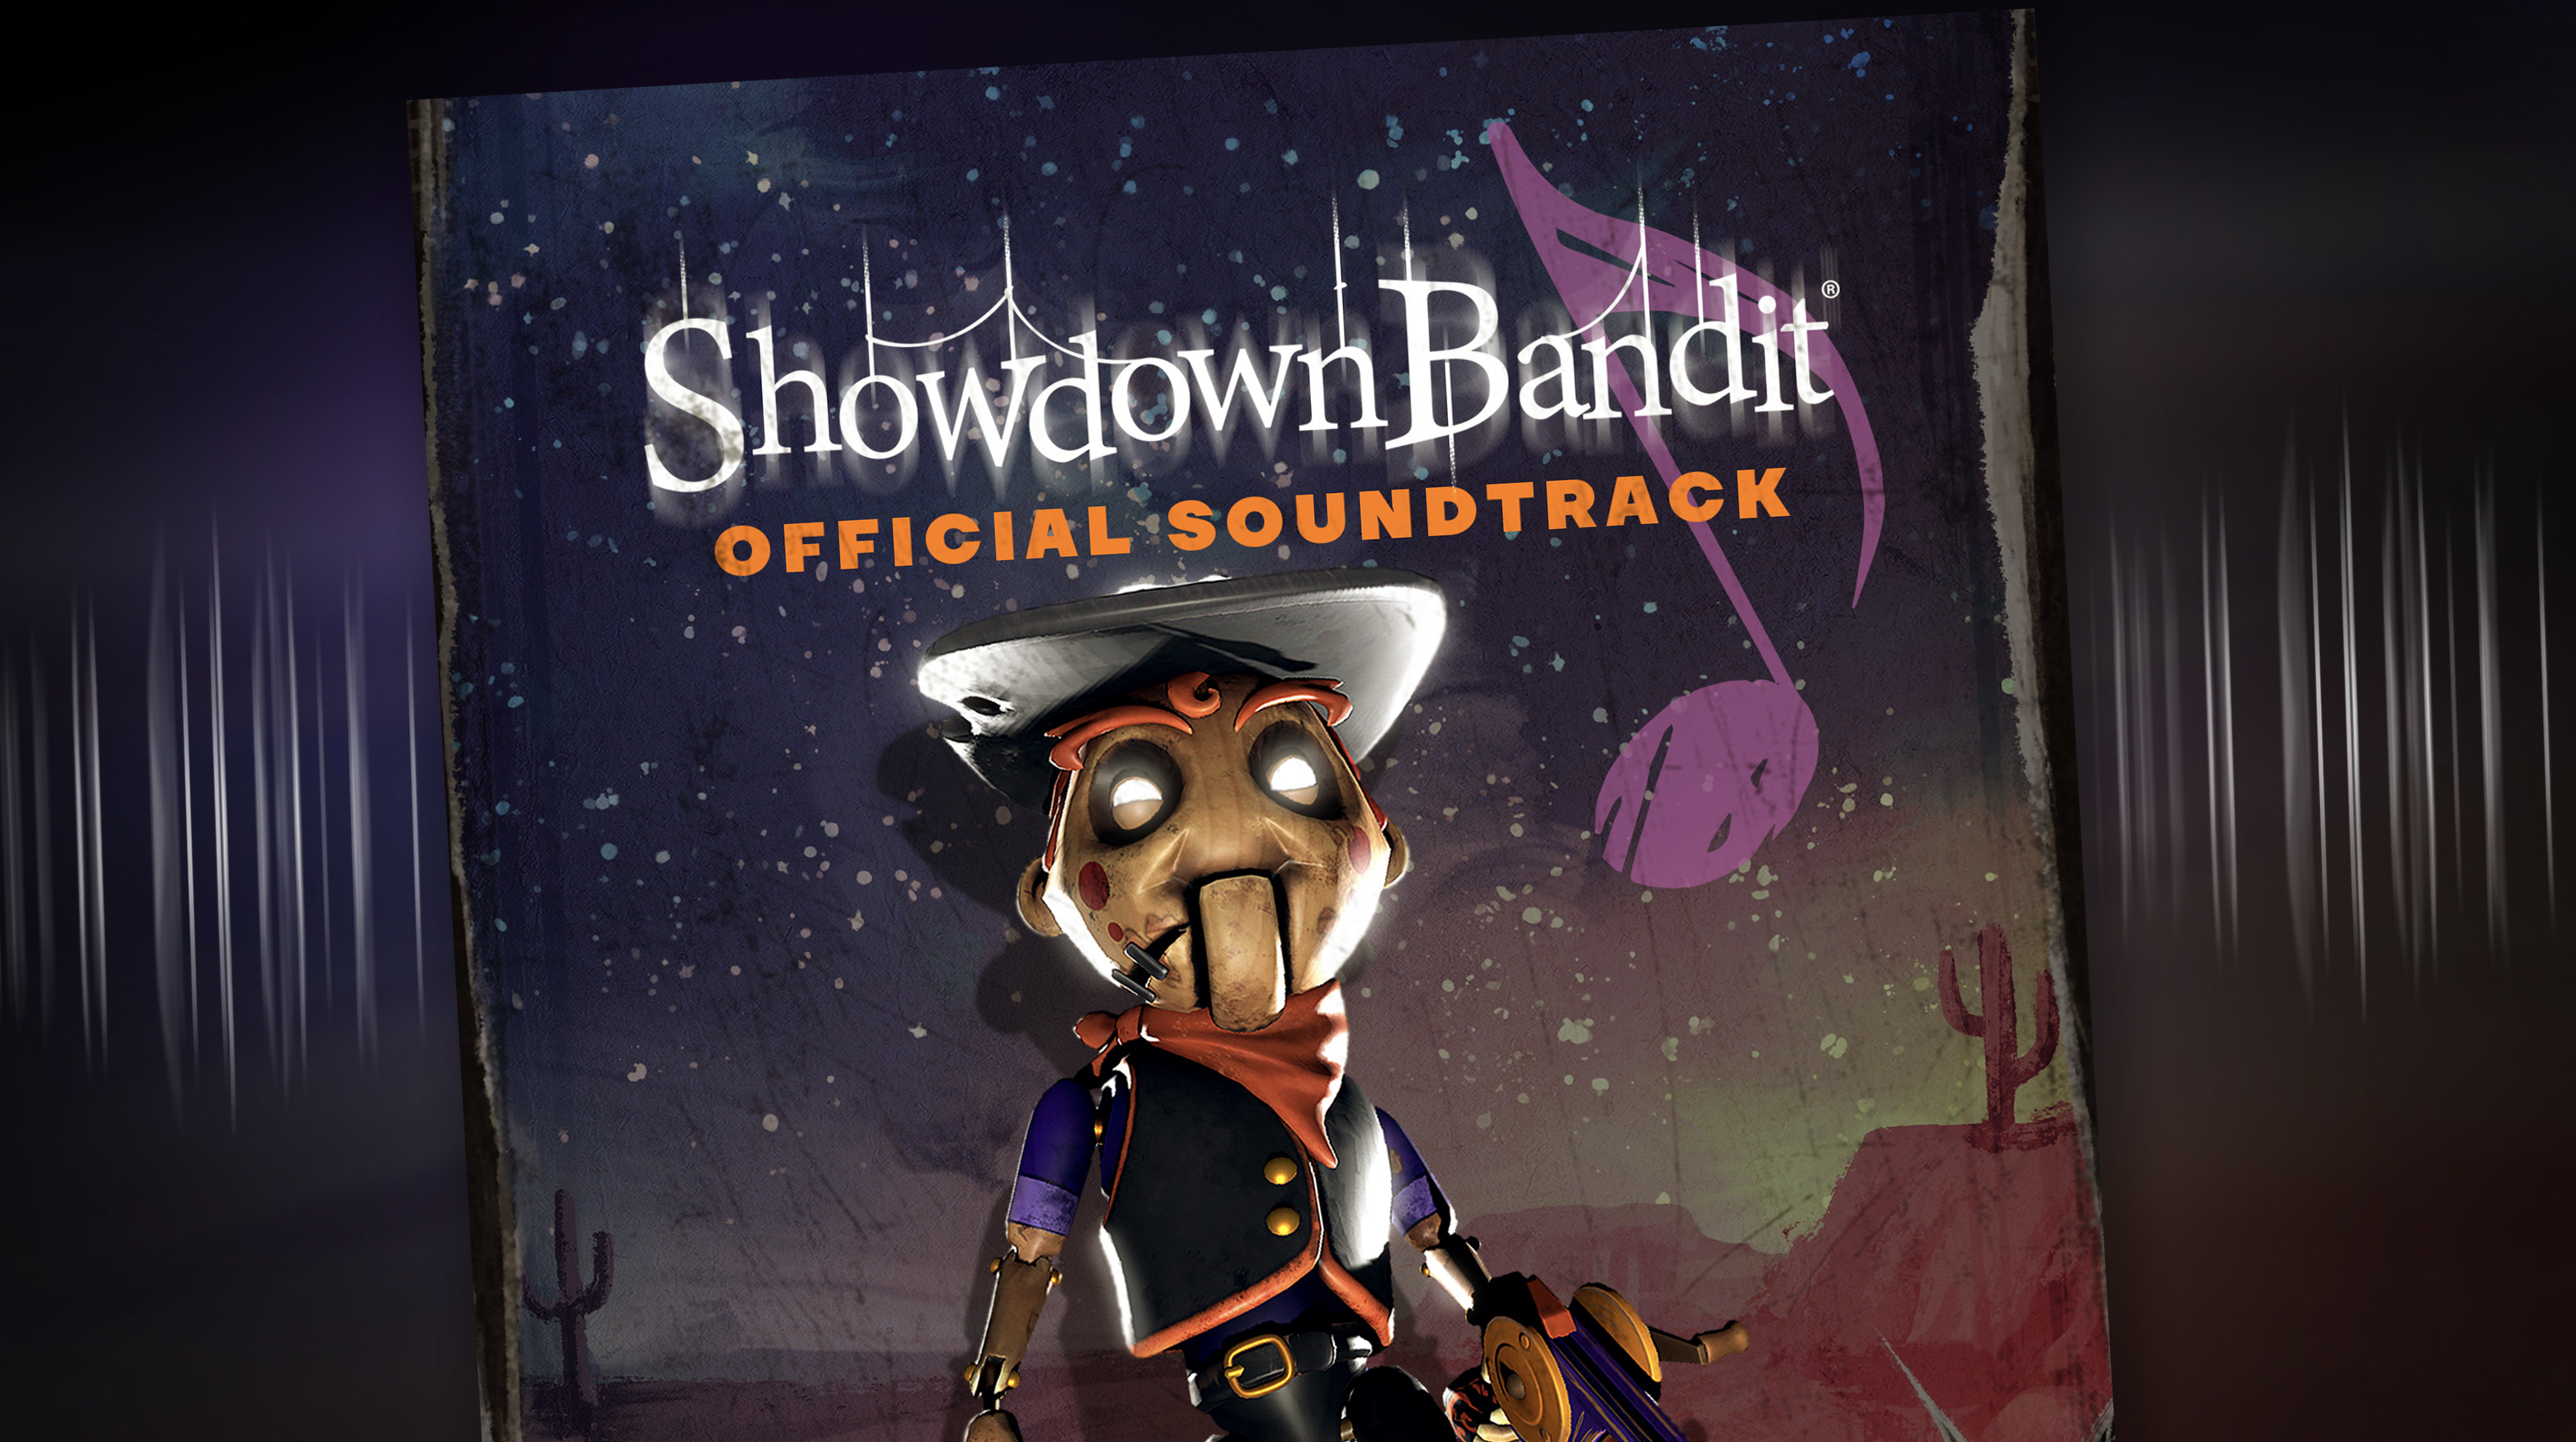 Showdown Bandit is FREE on Steam - Indie Game Bundles